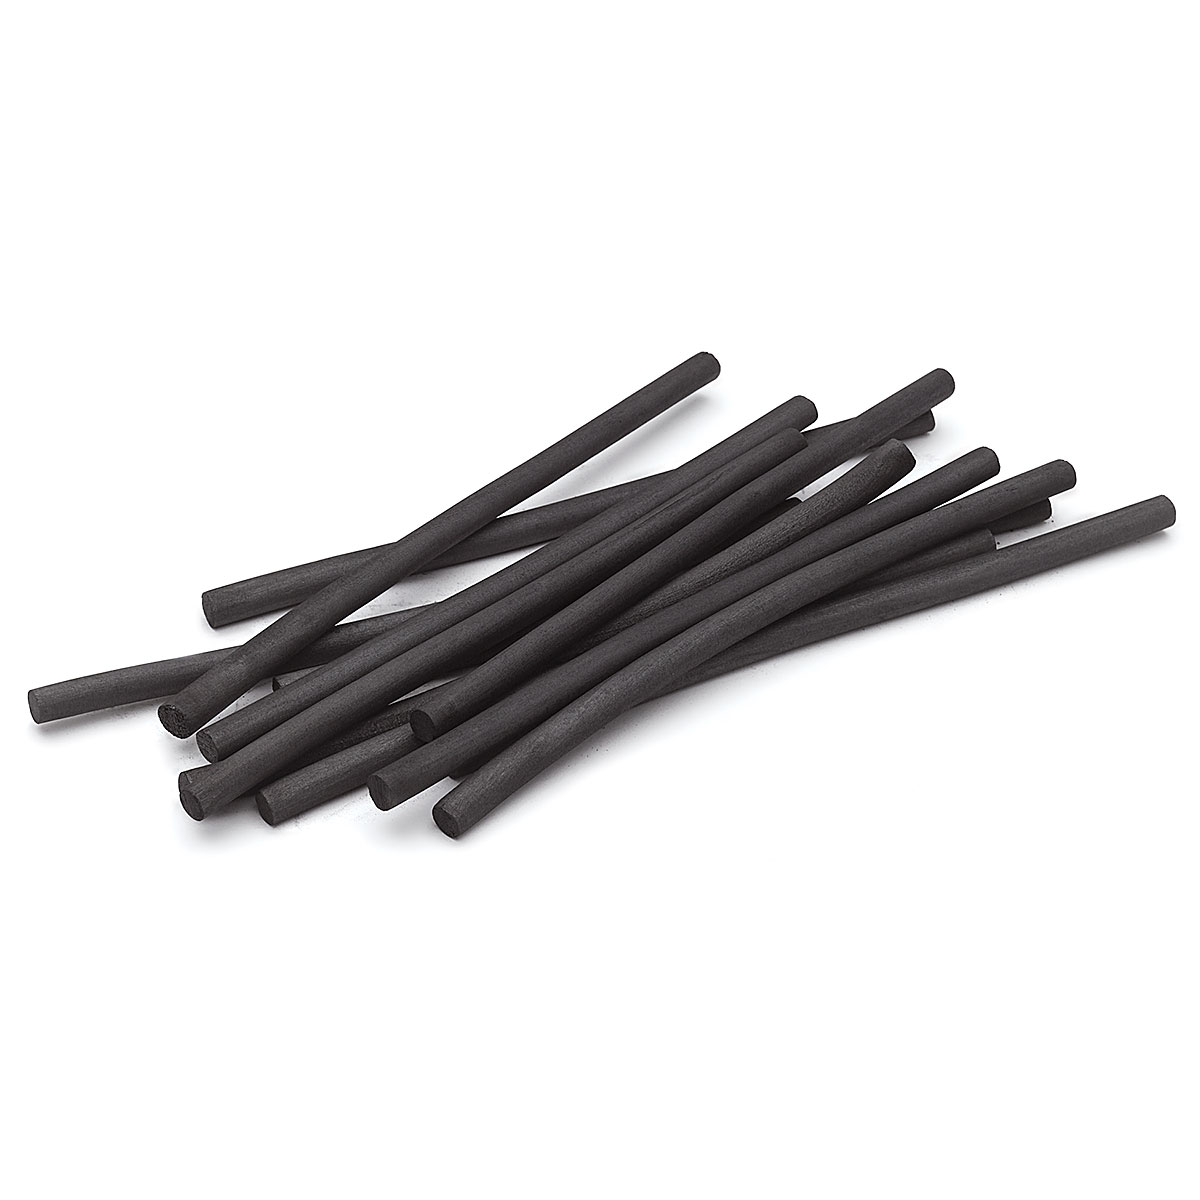 BLLNDX Charcoal Sticks 25PCS 5-7mm Dia Black Vine Willow